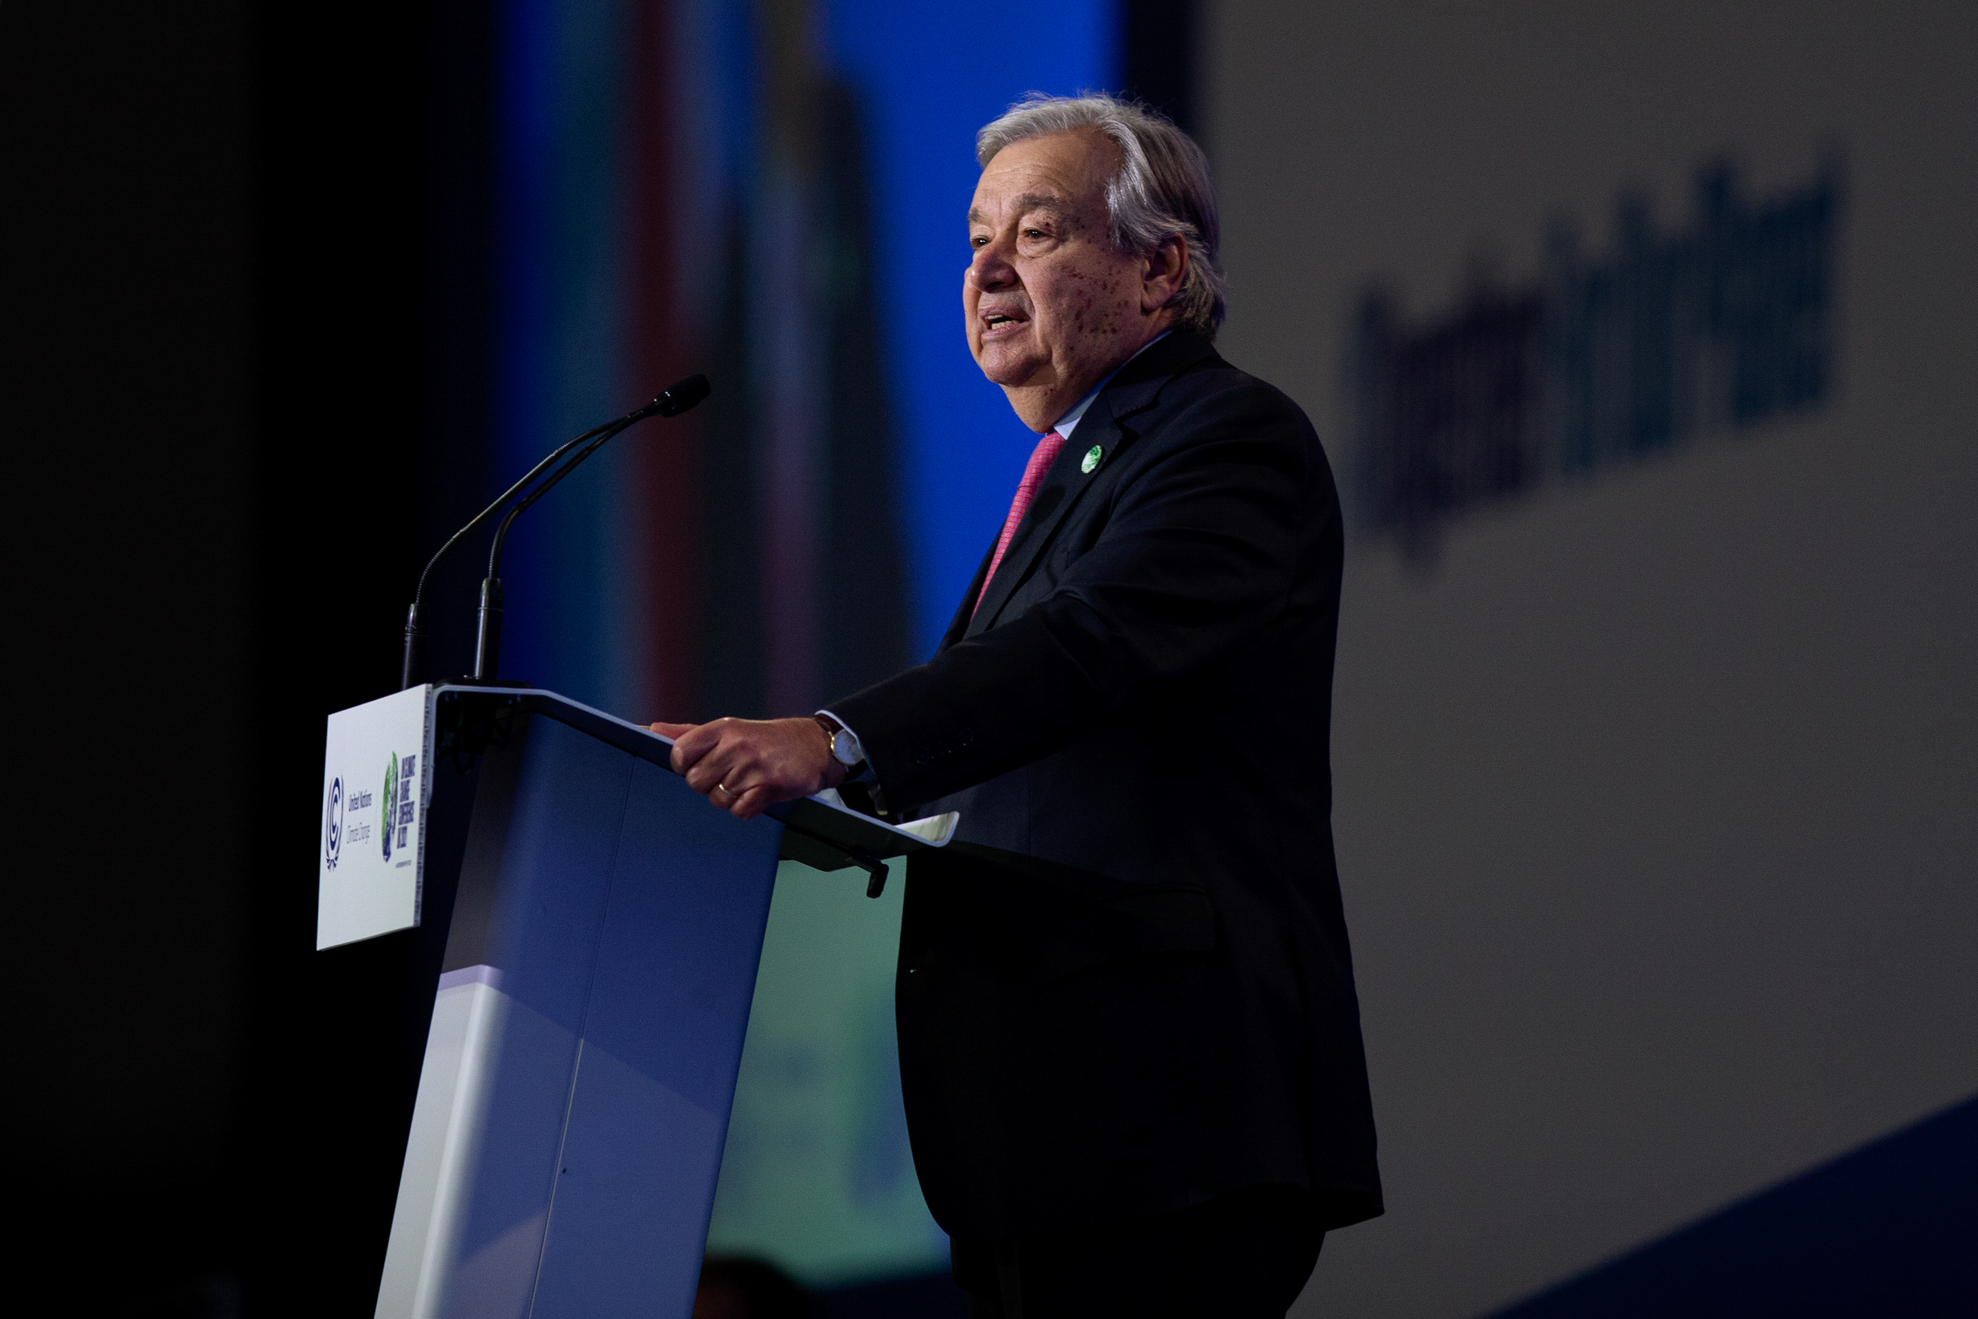 Antonio Guterres speaks during the COP26 climate talks in Glasgow, U.K., on Nov. 1.